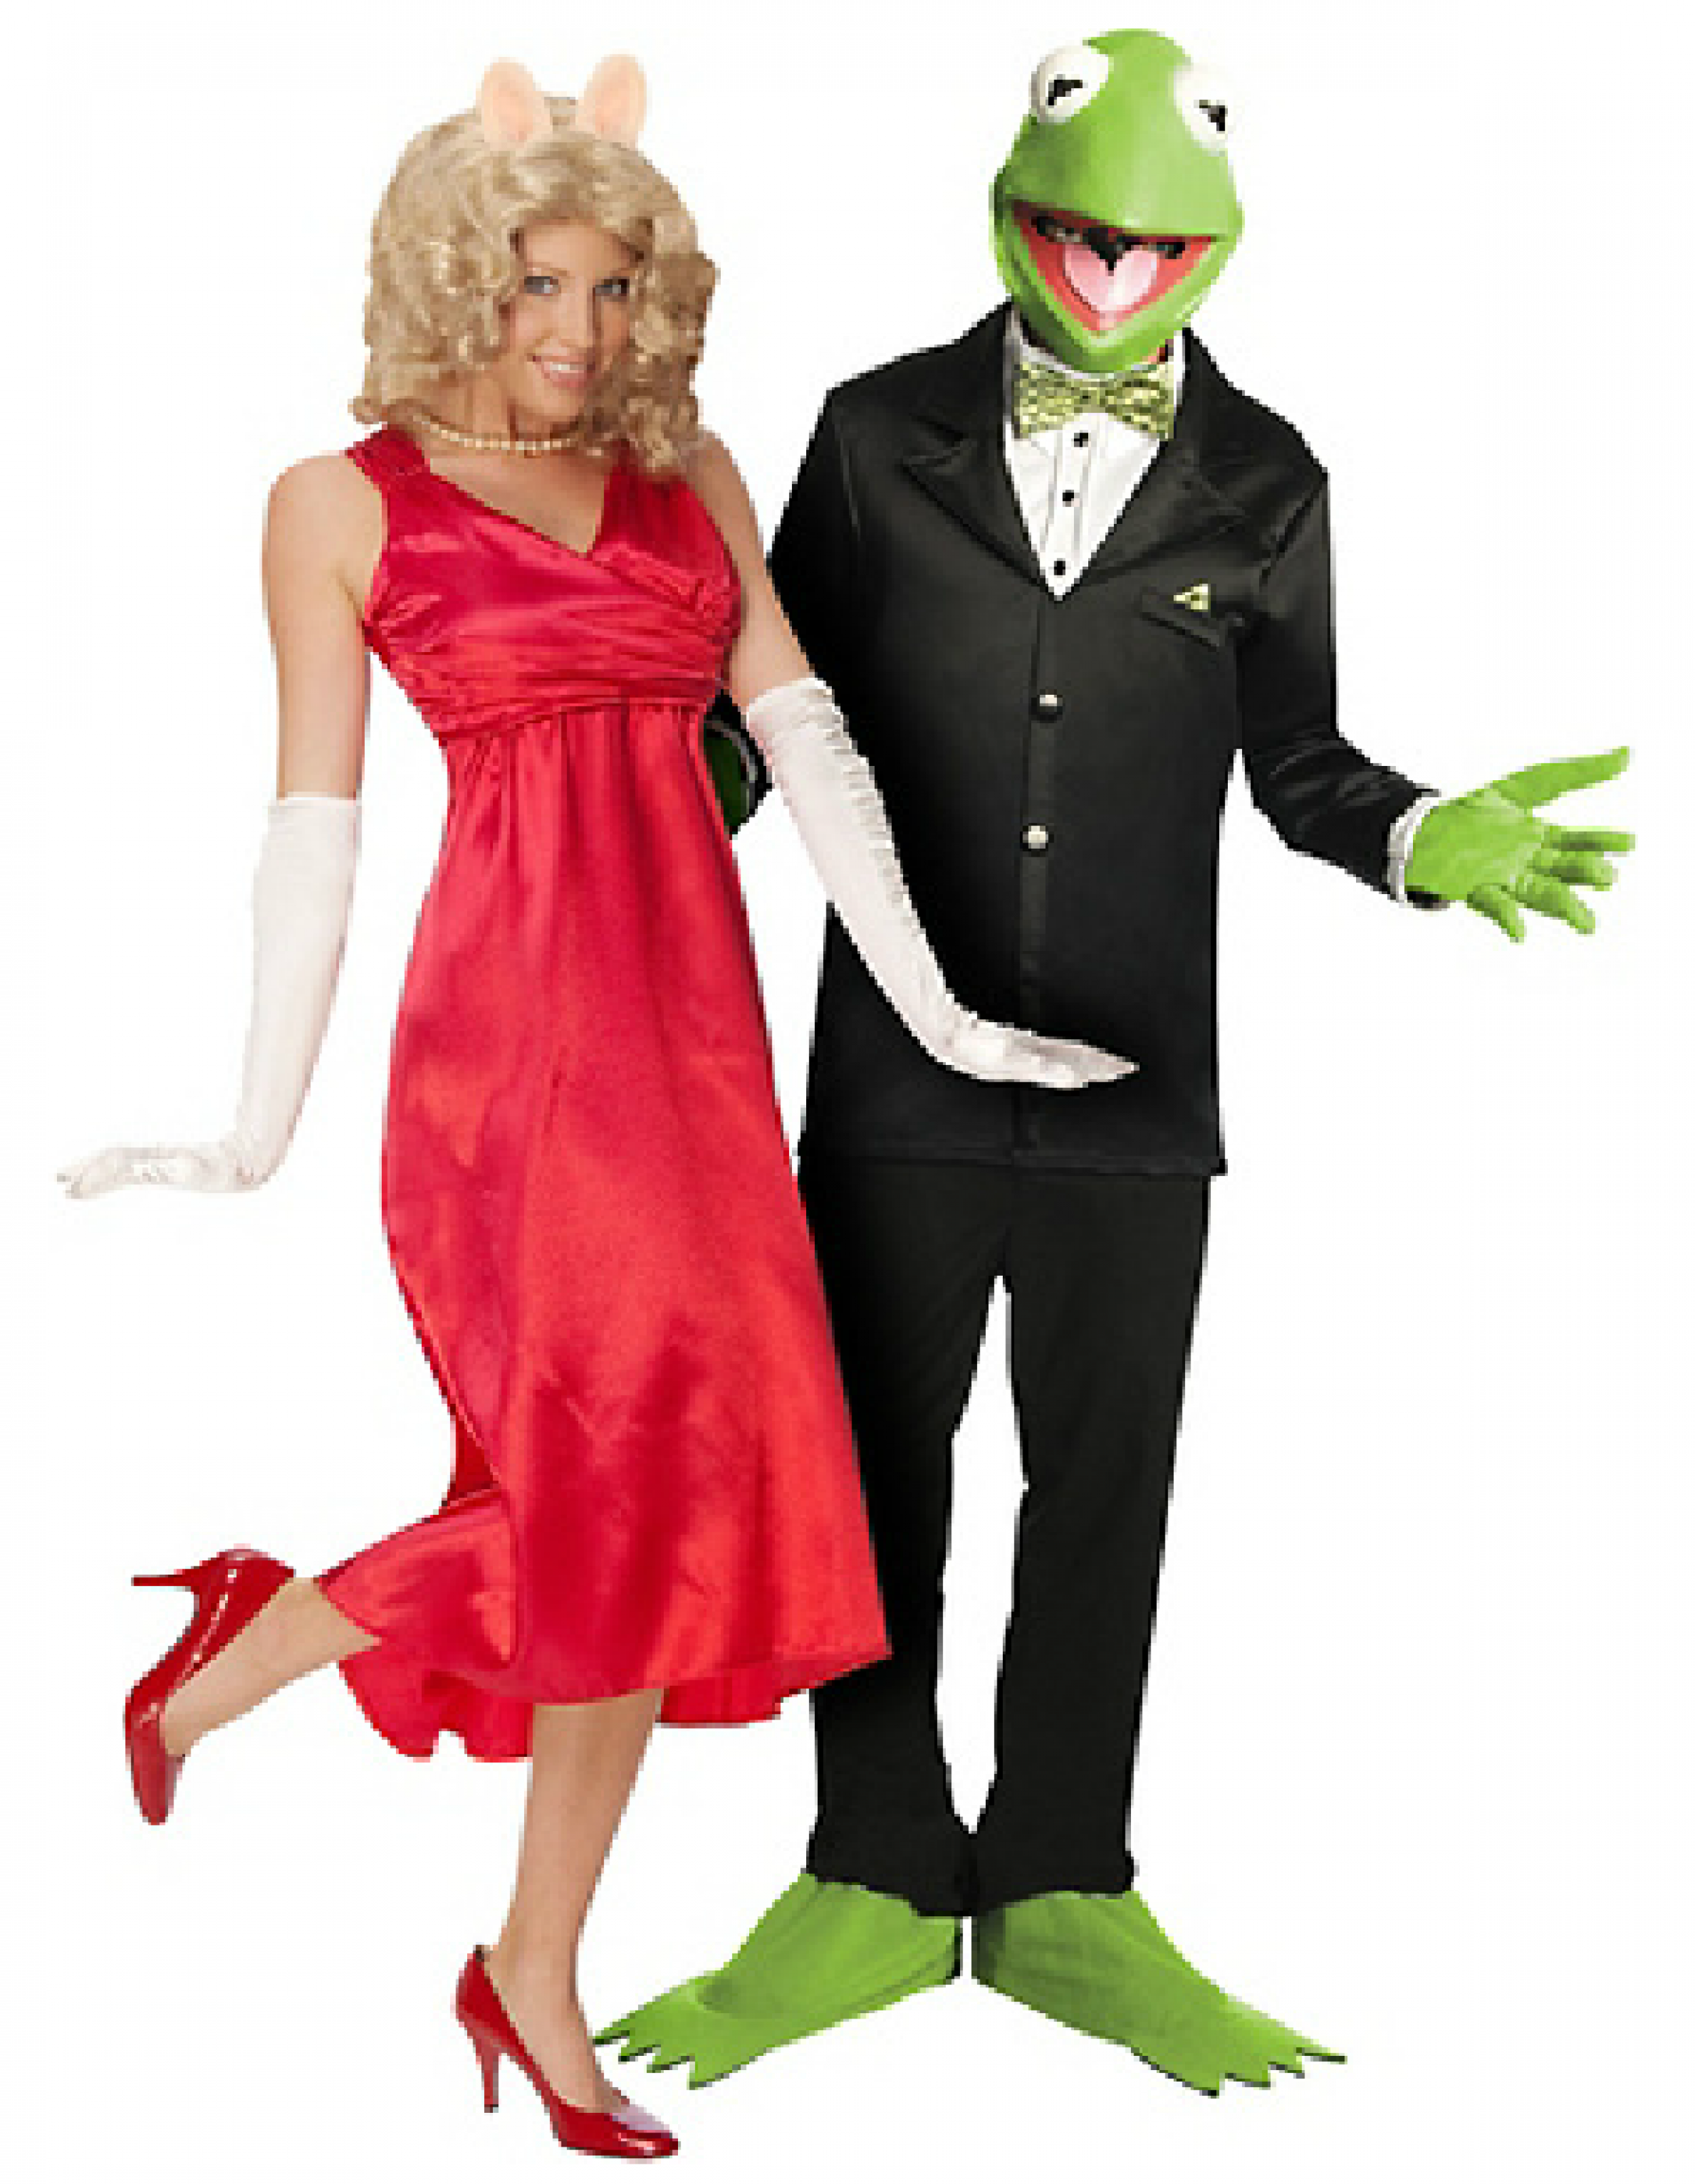 Ms. Piggy and Kermit